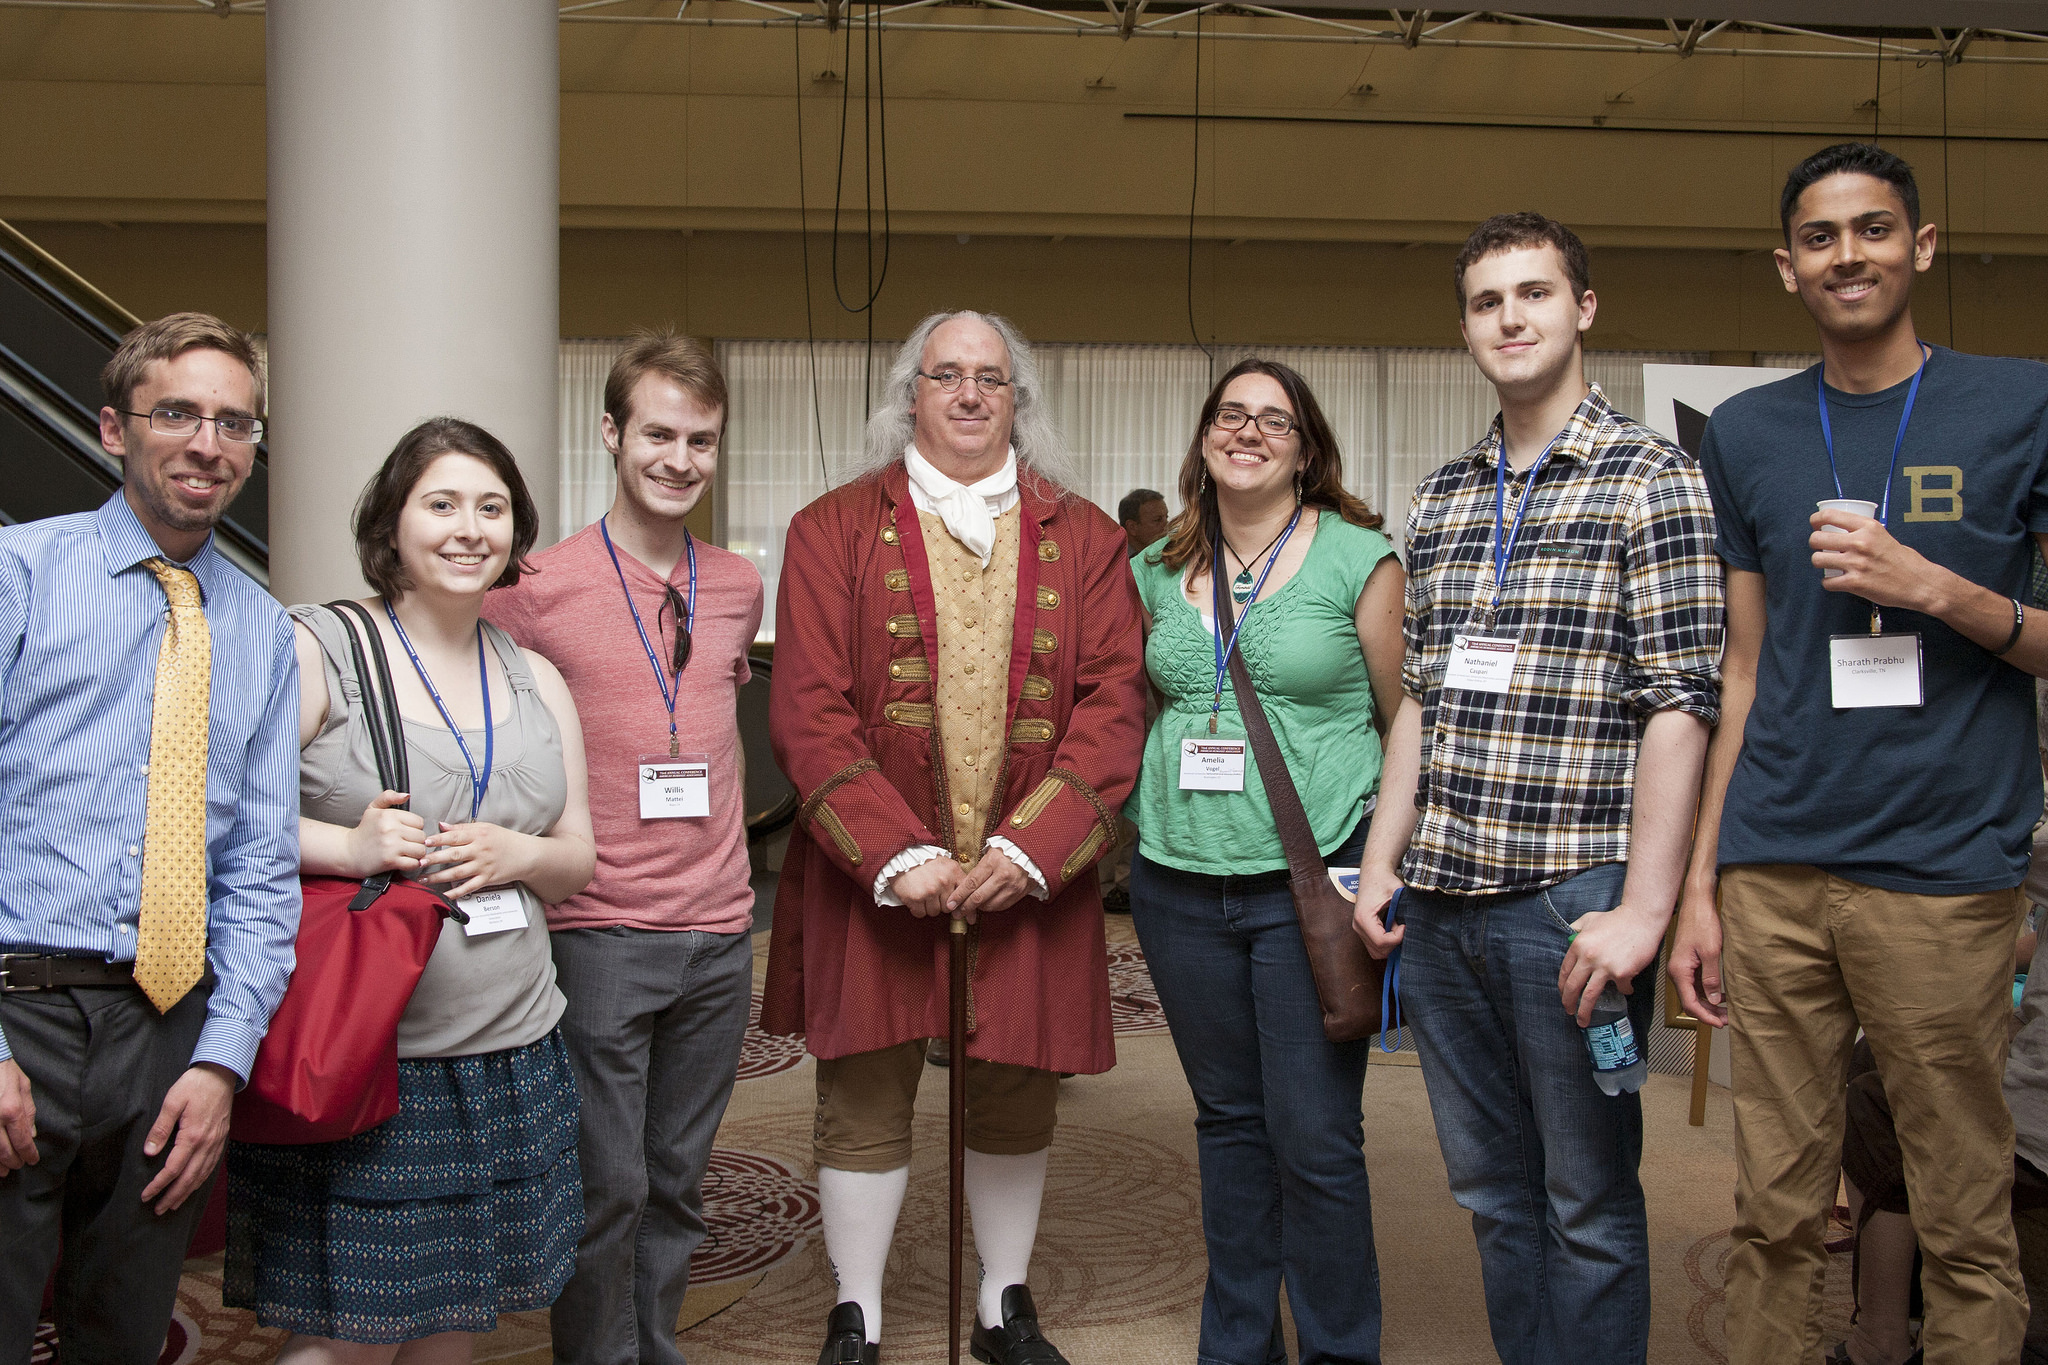 Benjamin Franklin & conference attendees